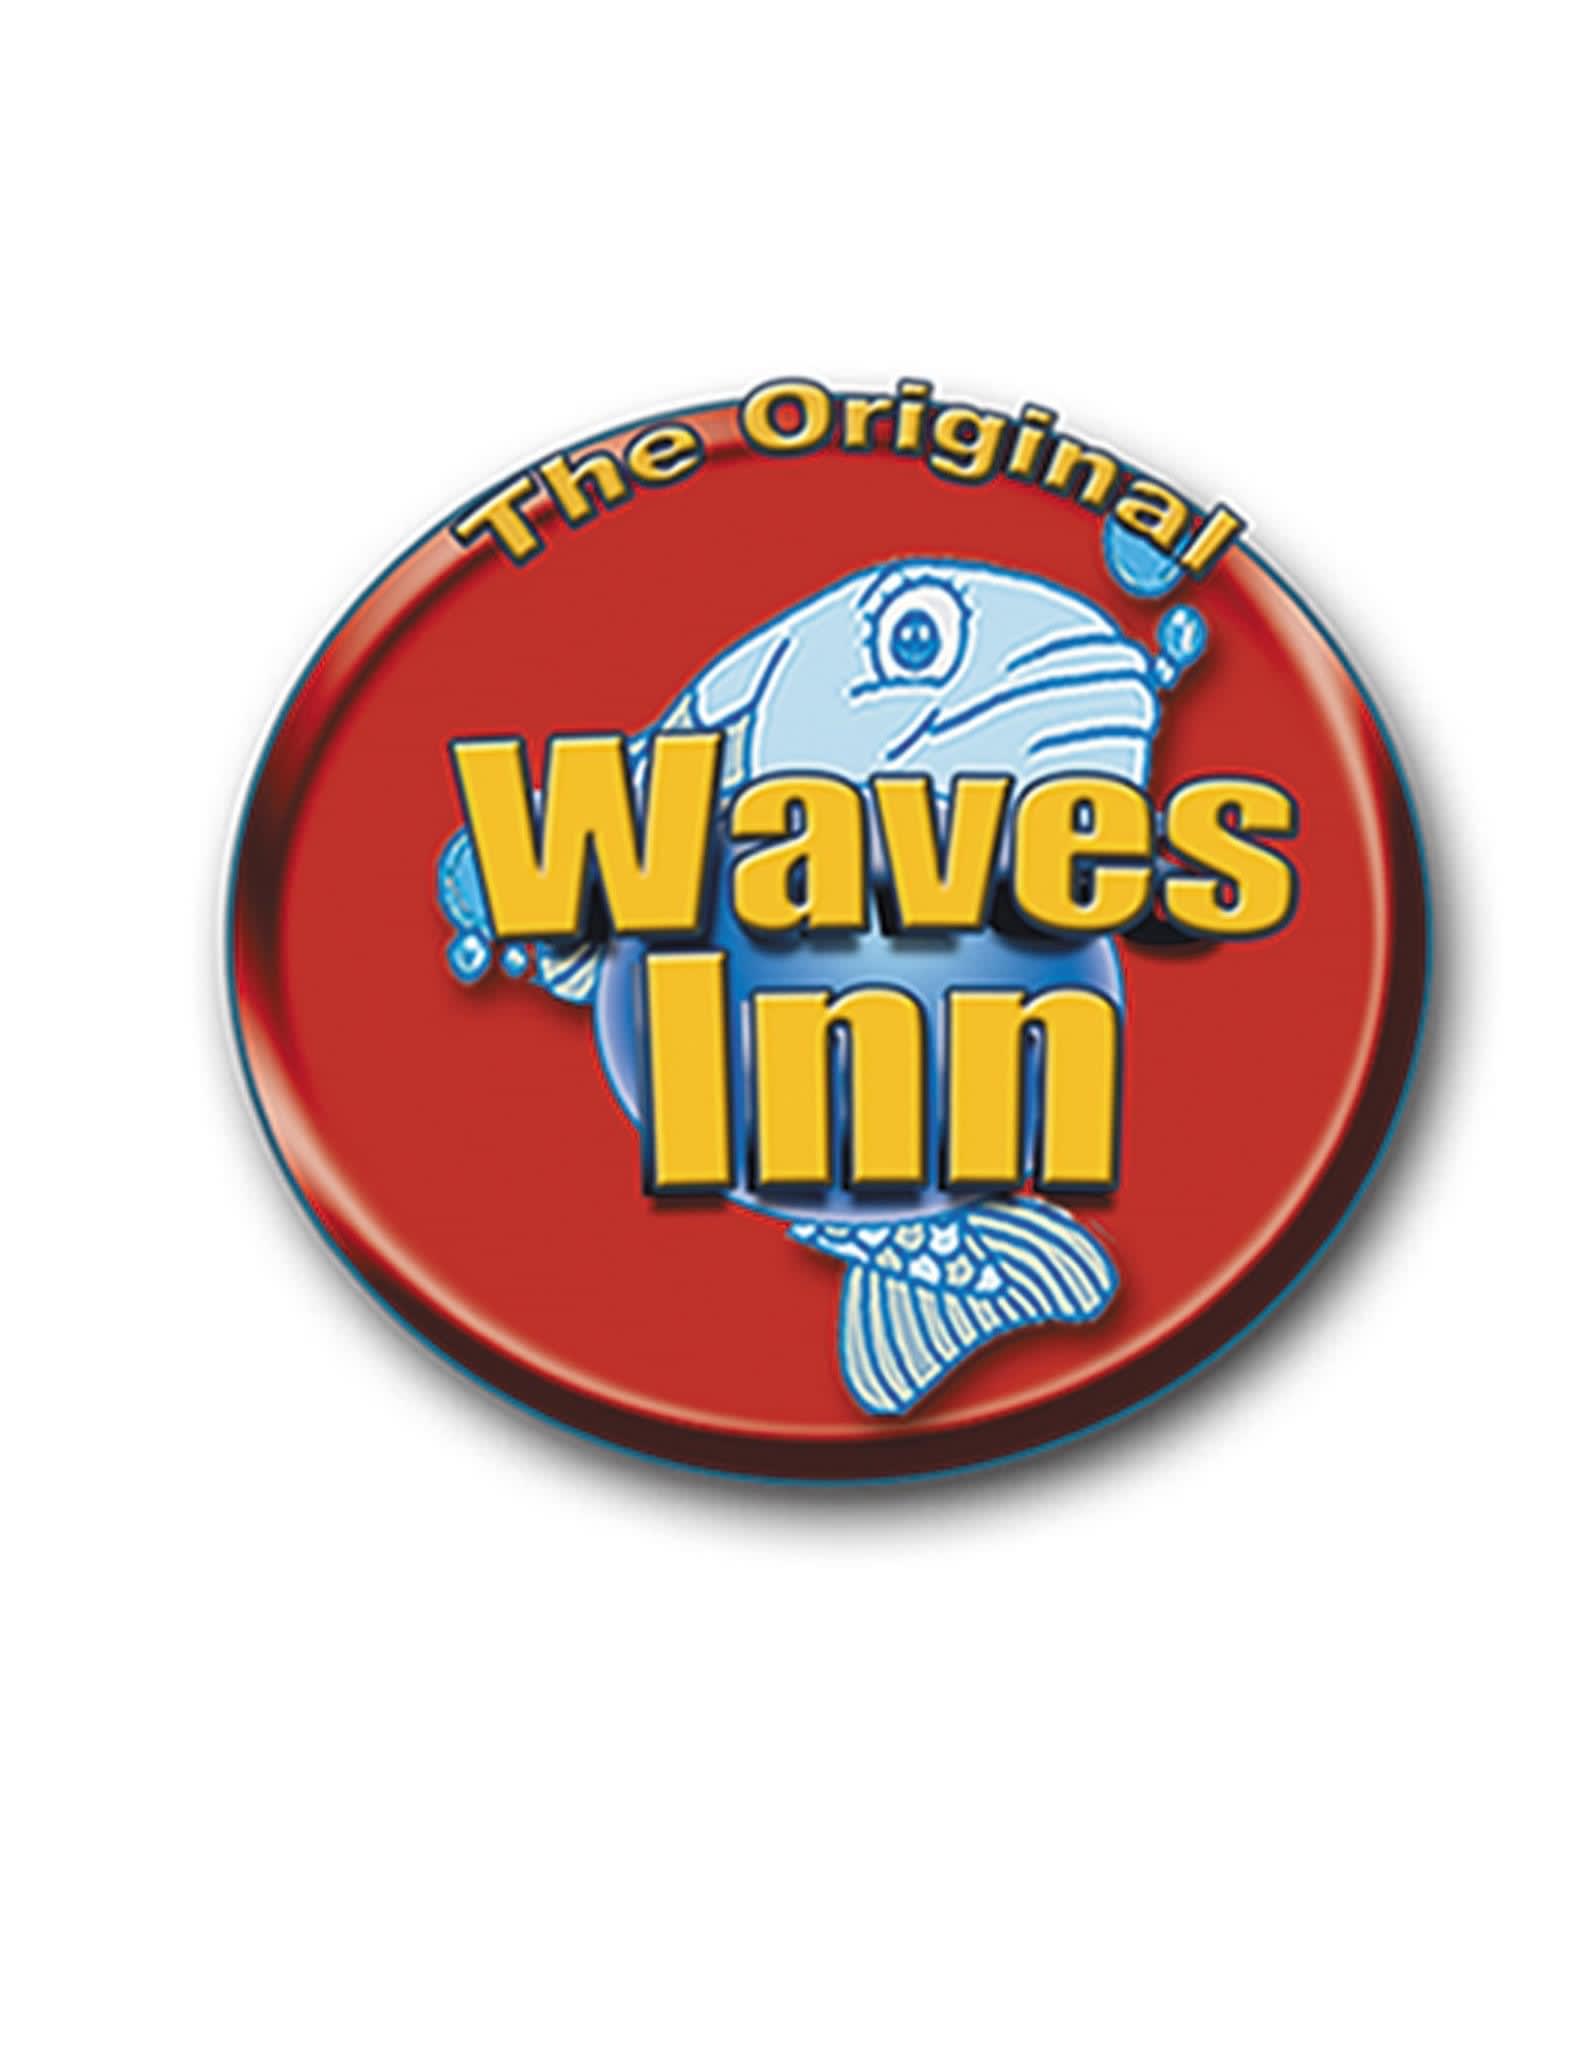 Original Waves Inn